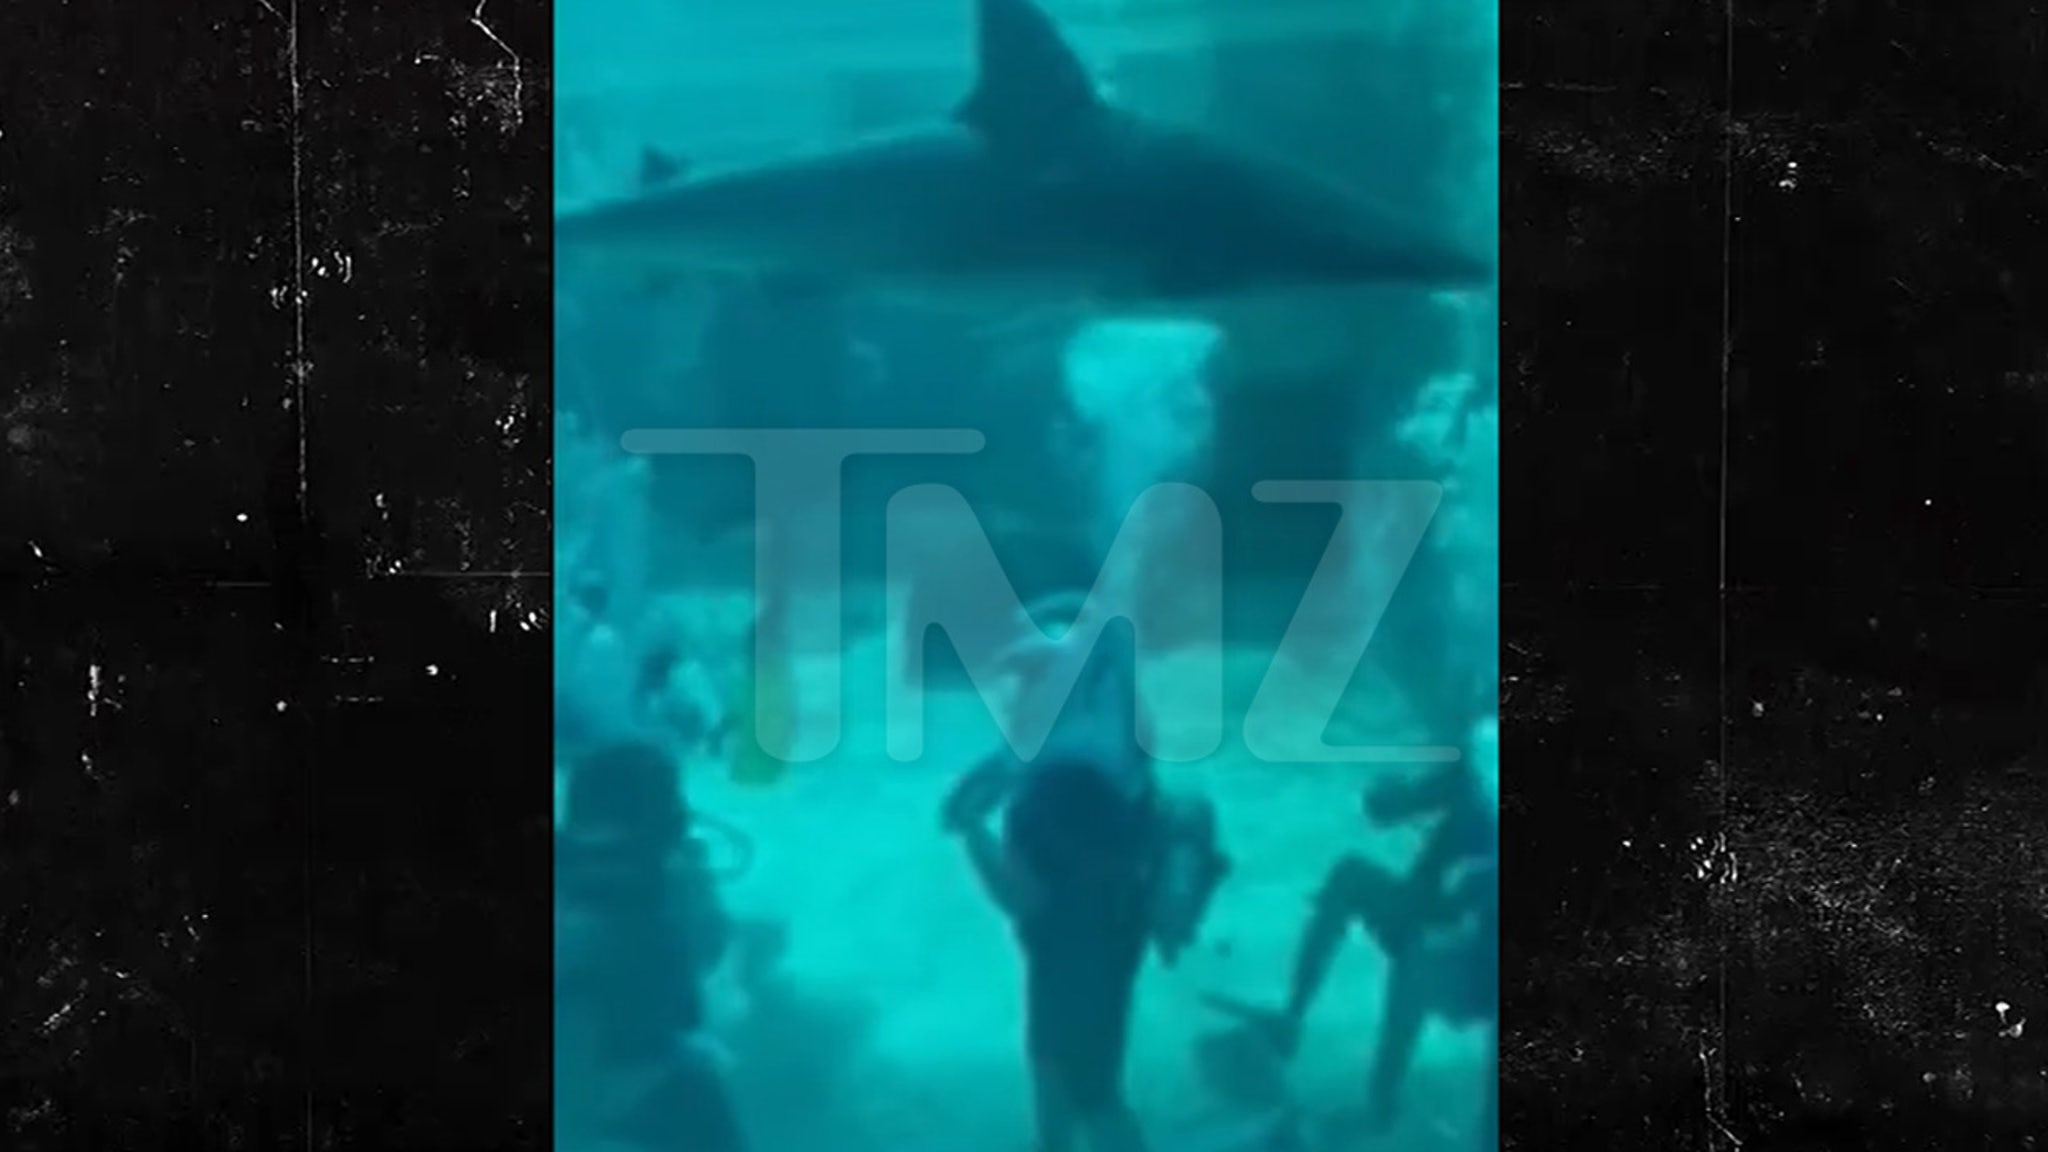 Bahamas Shark Attack Video Shows Child Victim Screaming